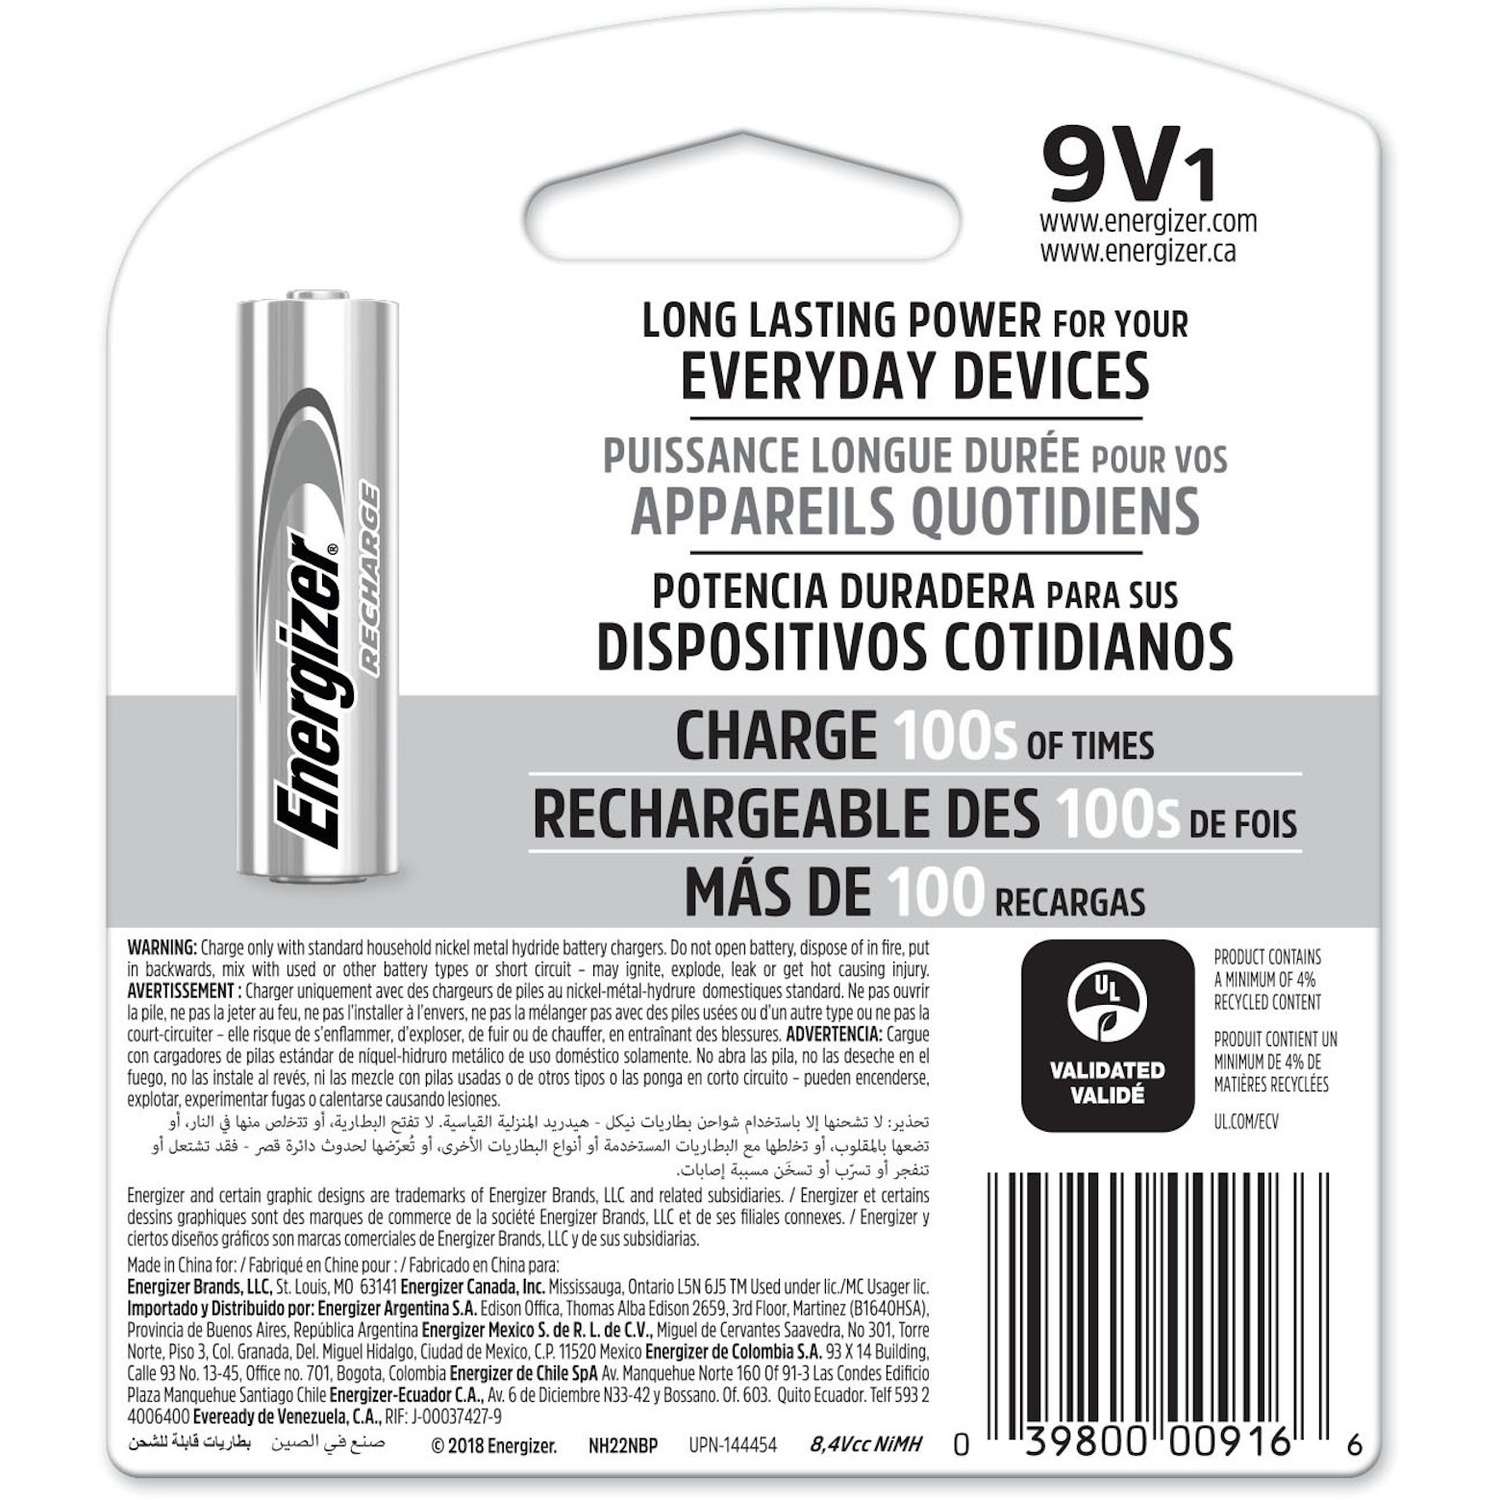 Energizer 9V Batteries, Pre-Charged 9 Volt Rechargeable Batteries, 1 Count